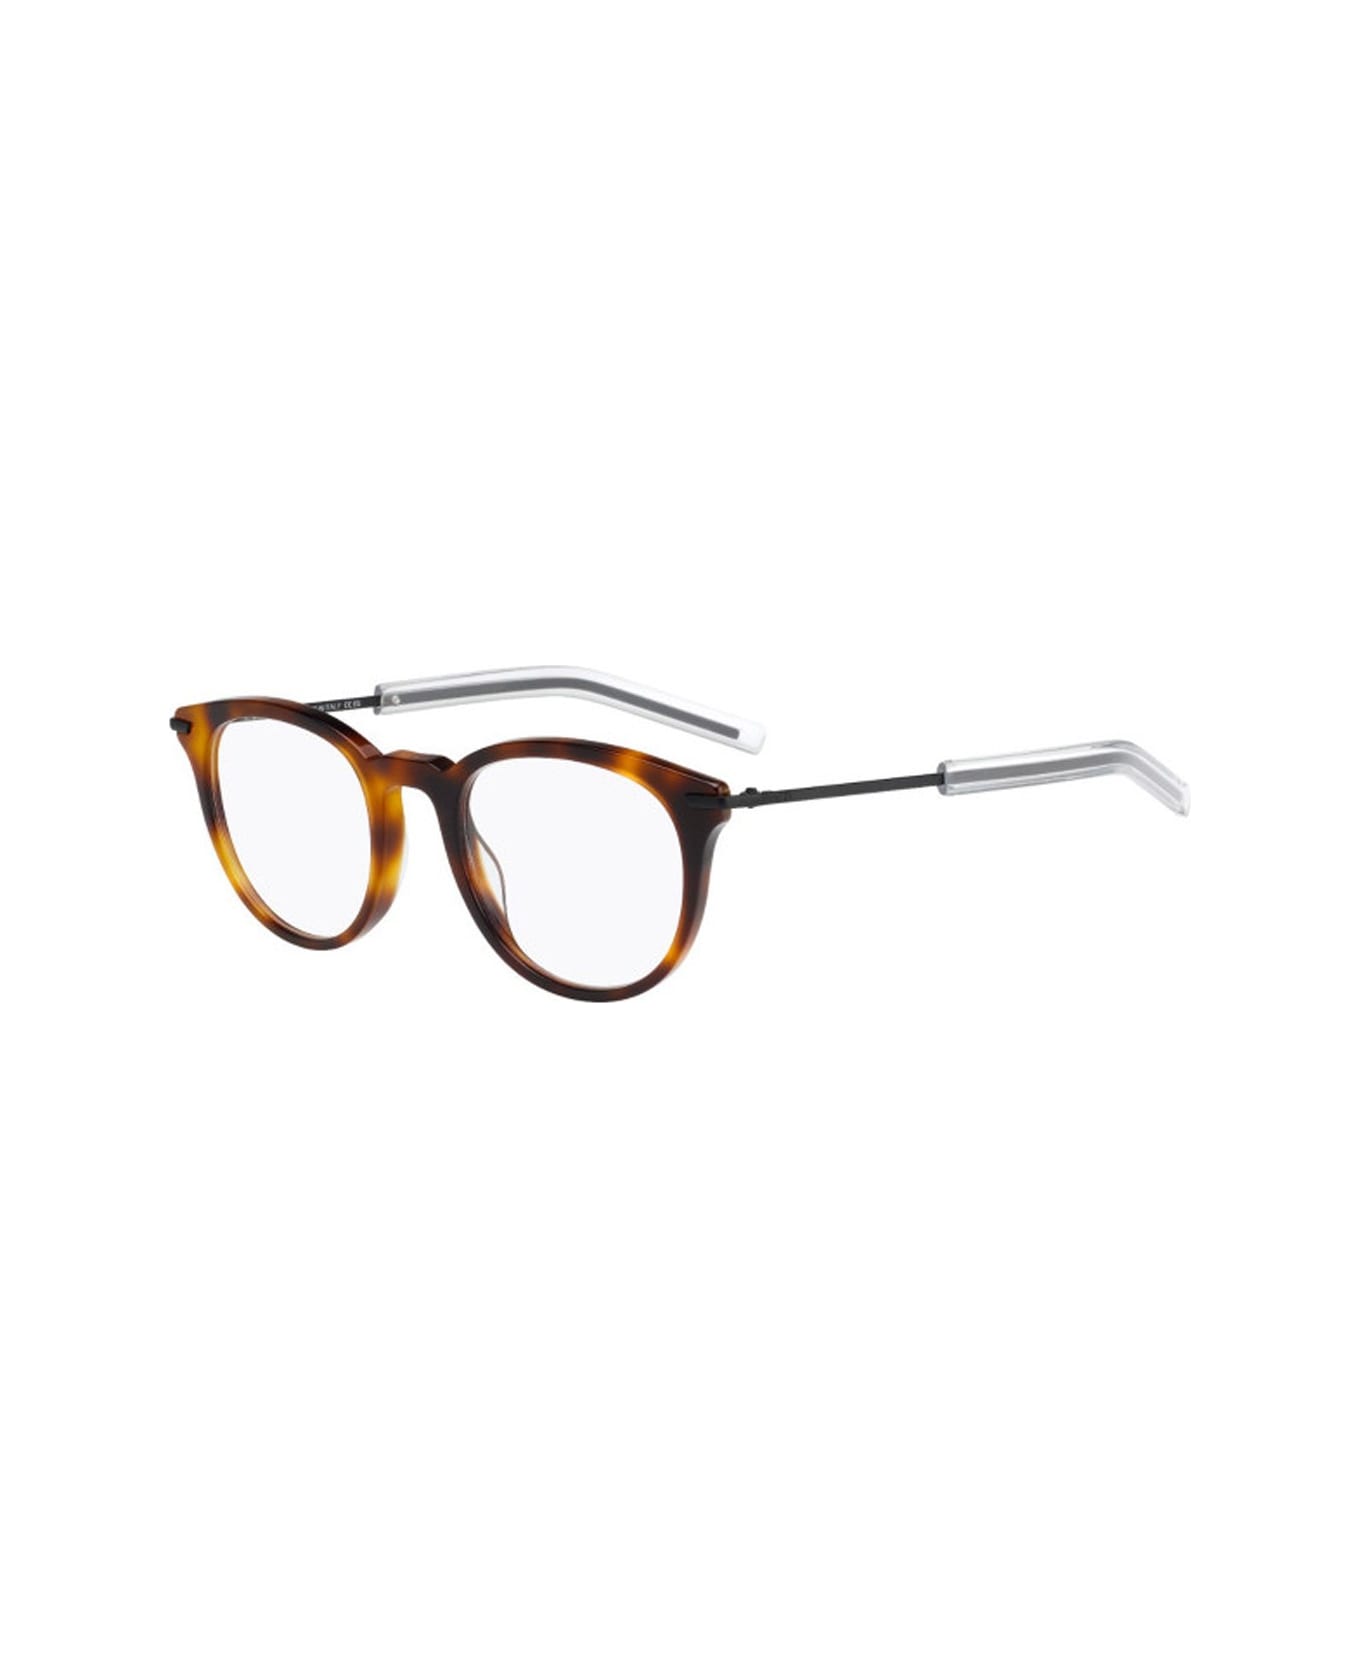 Dior Eyewear Blacktie201 Glasses - Marrone